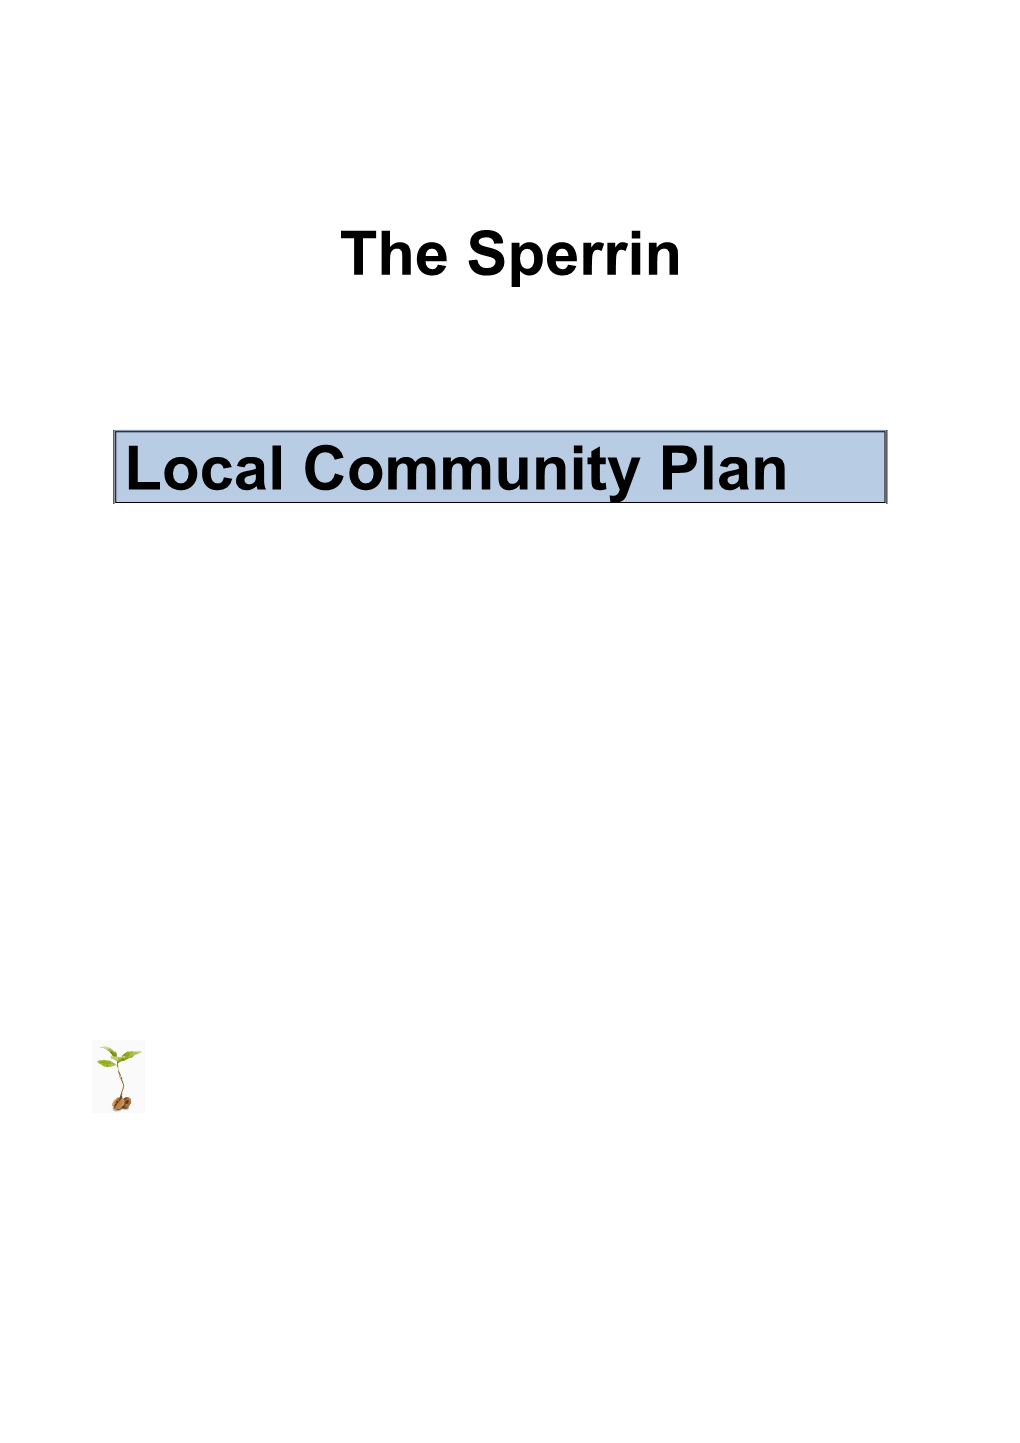 Sperrin Local Community Plan Draft